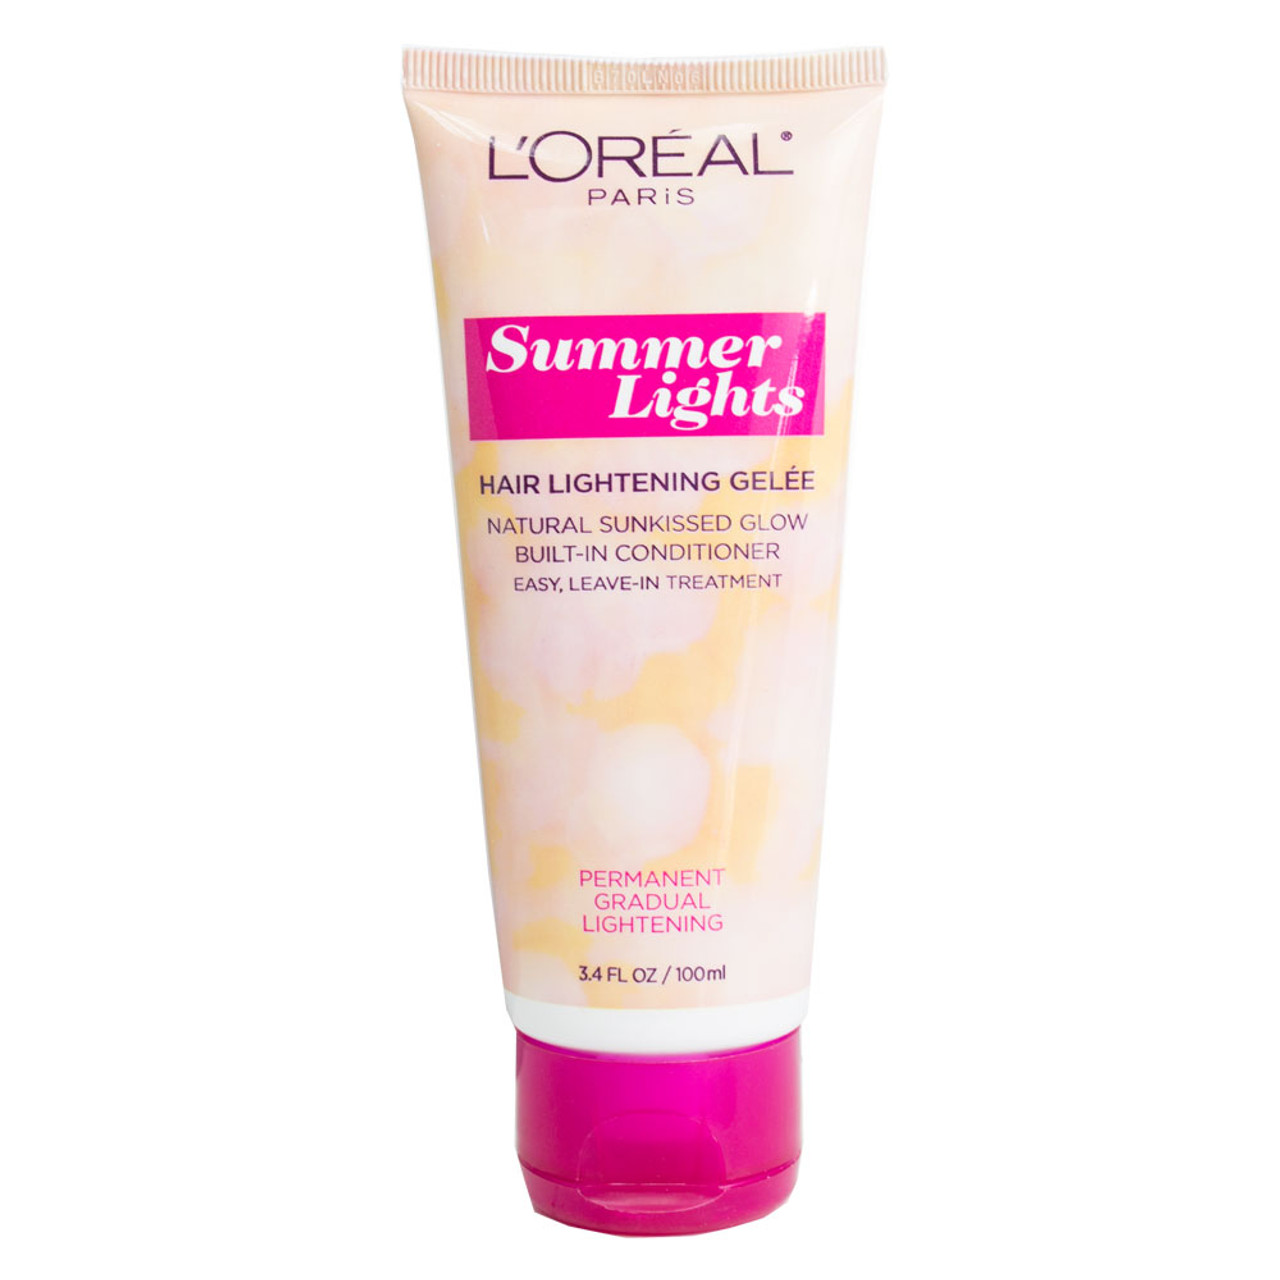 Loreal Loreal Summer Lights Hair Lightening Gelee, 3.4 oz 